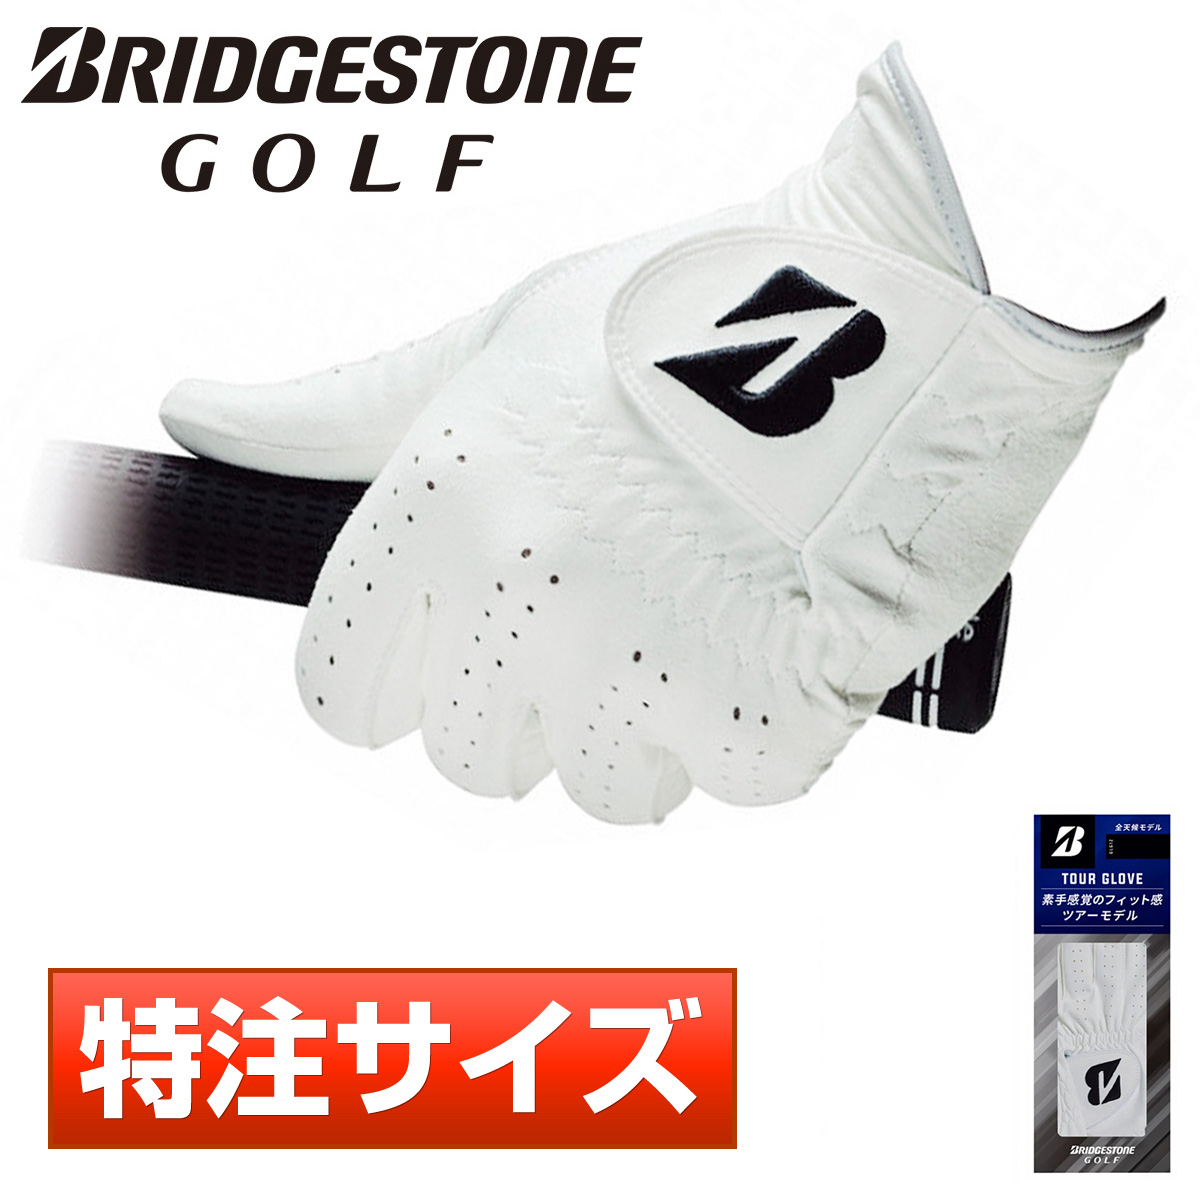 BRIDGESTONE GOLF ブリヂストンゴルフ日本正規品 TOUR 